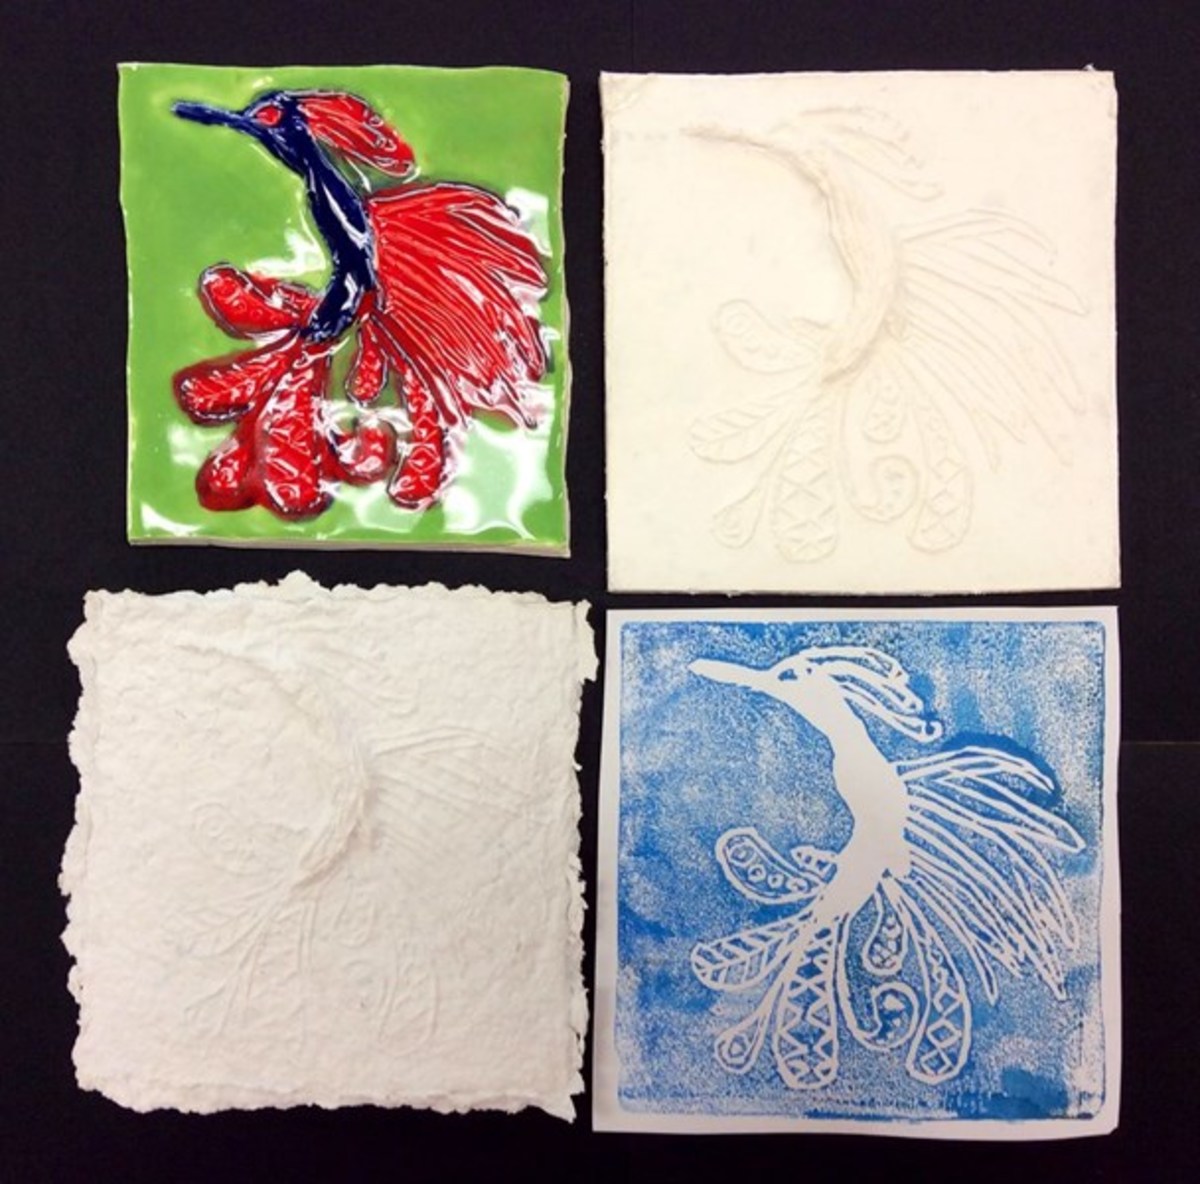 Plaster, Paper, Clay, Print: A 4-Part Art Lesson